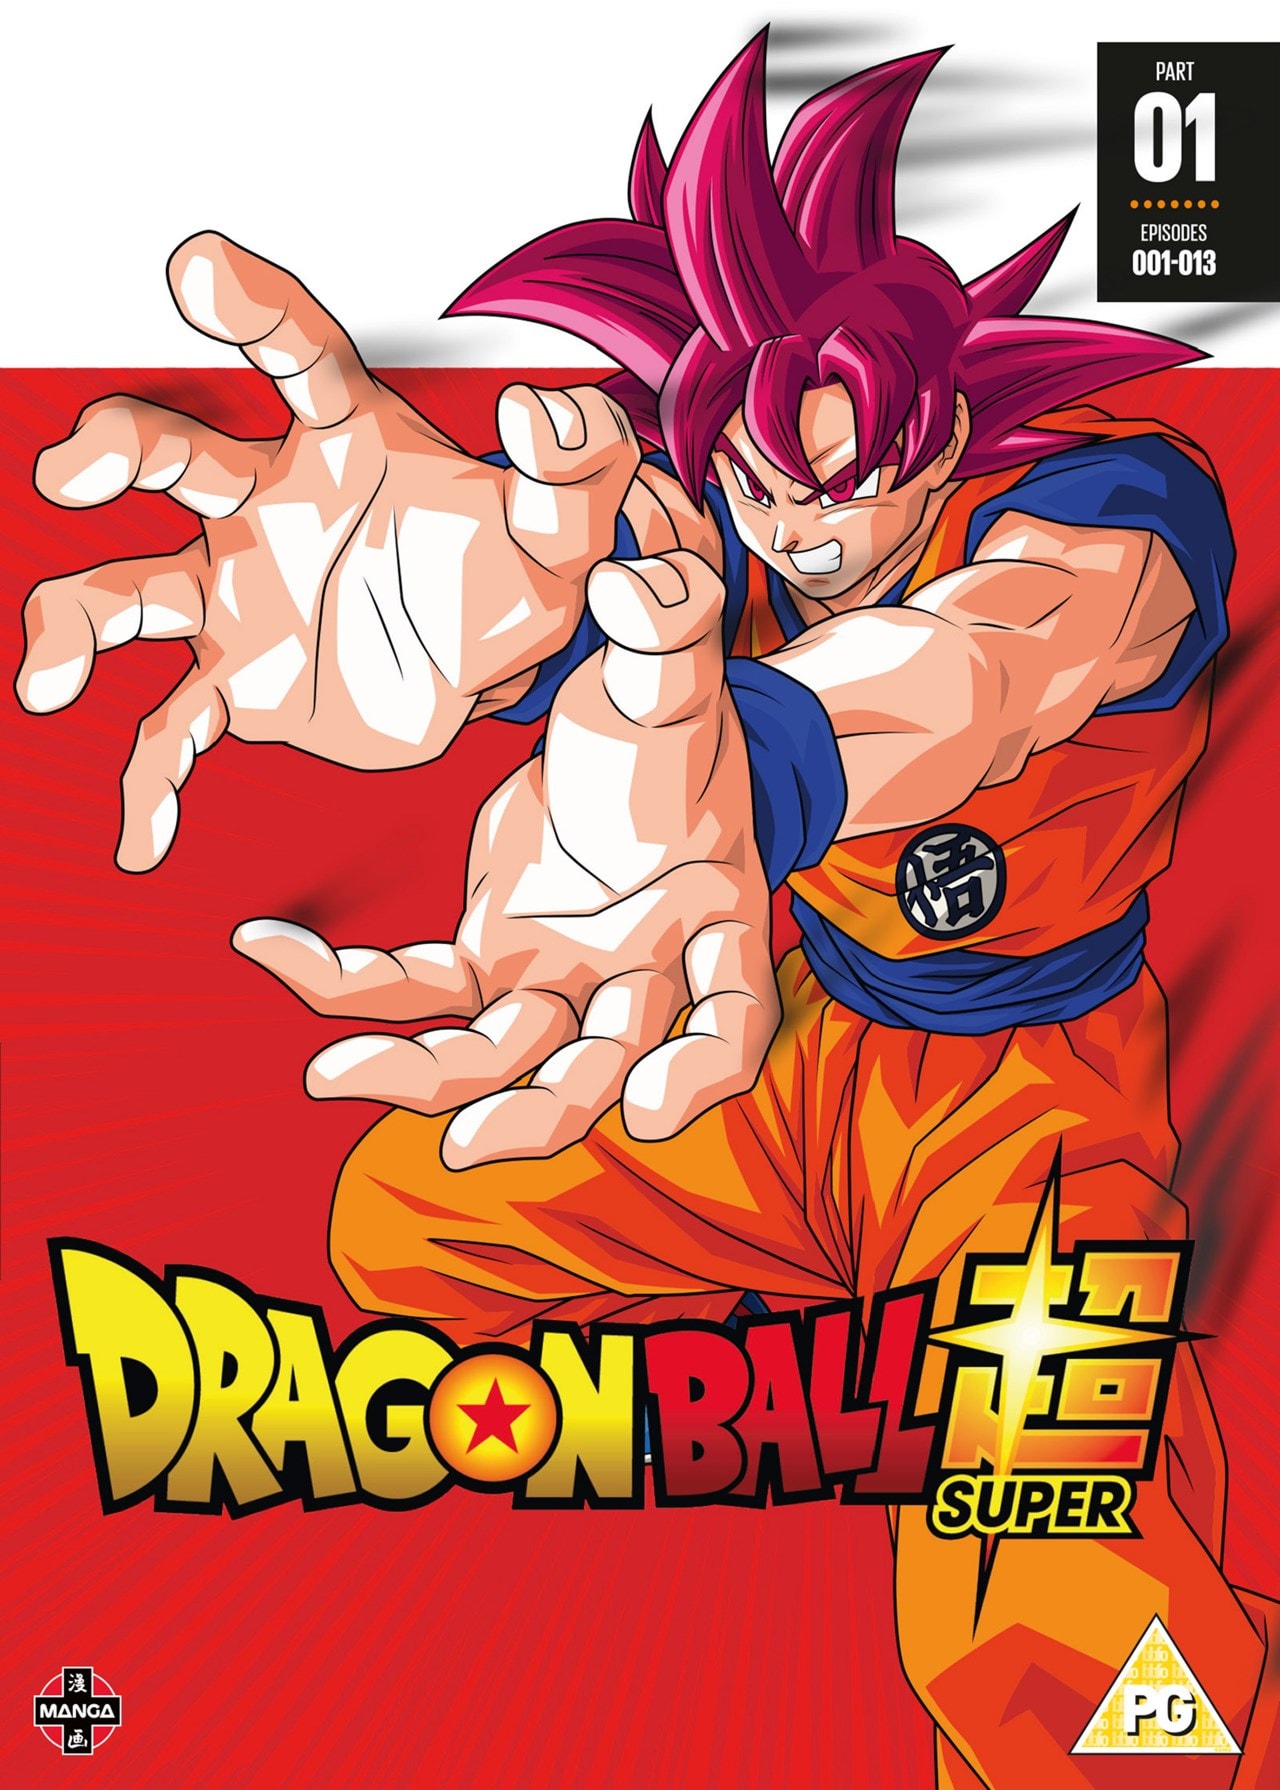 Dragon Ball Super: Season 1 - Part 1 | DVD | Free shipping over £20 | HMV Store